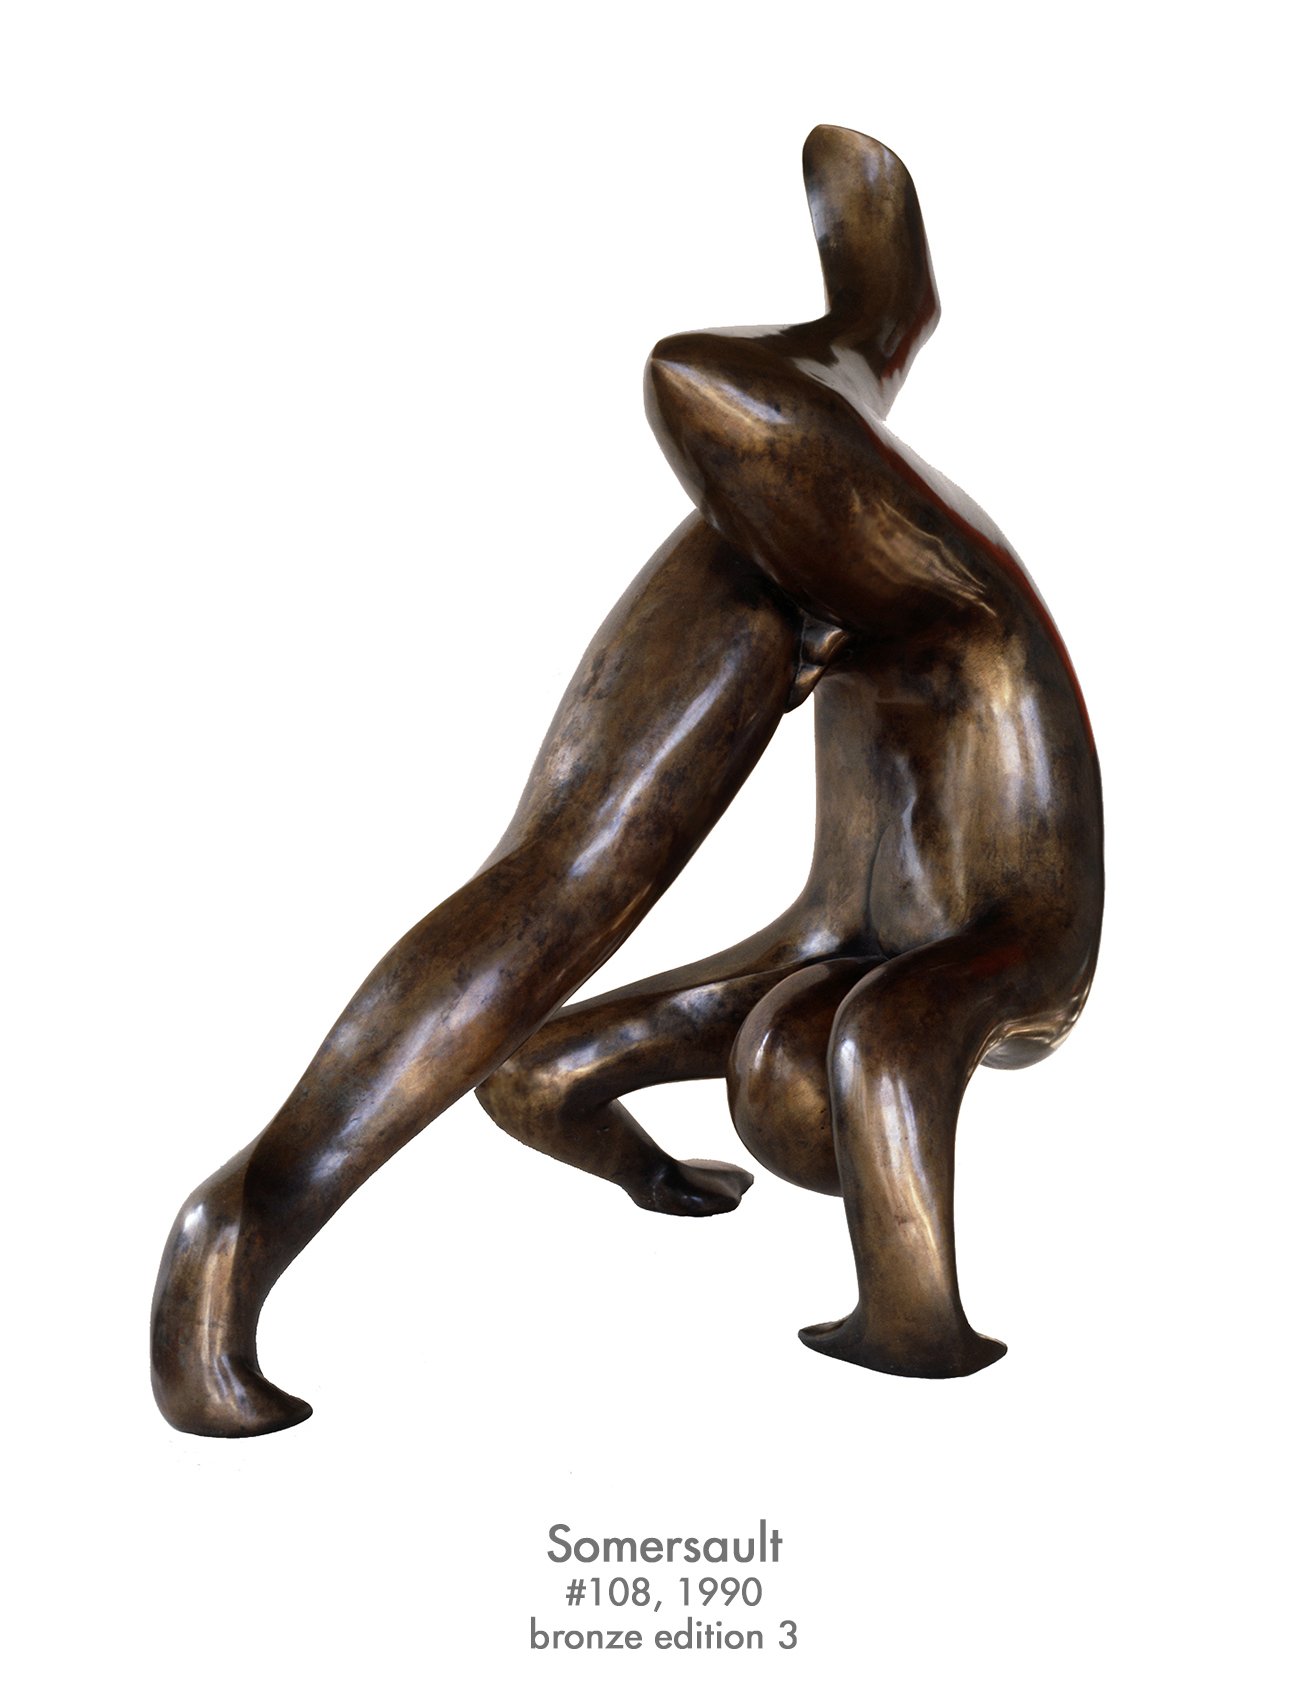 Somersault, 1990, bronze, #108